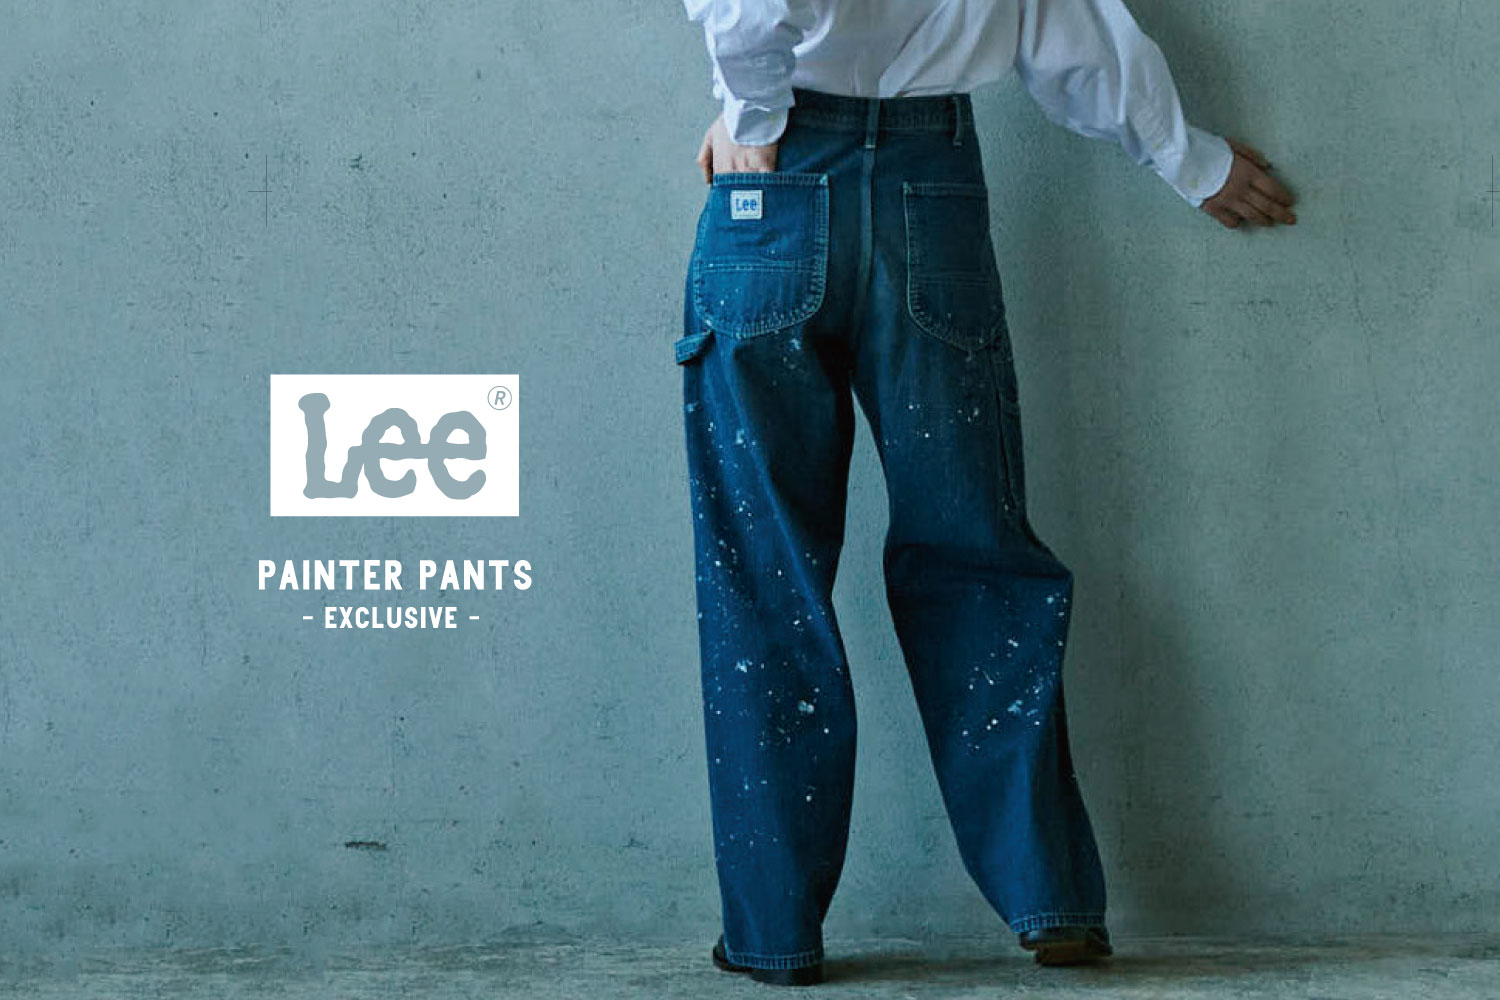 Lee - PAINTER PANTS